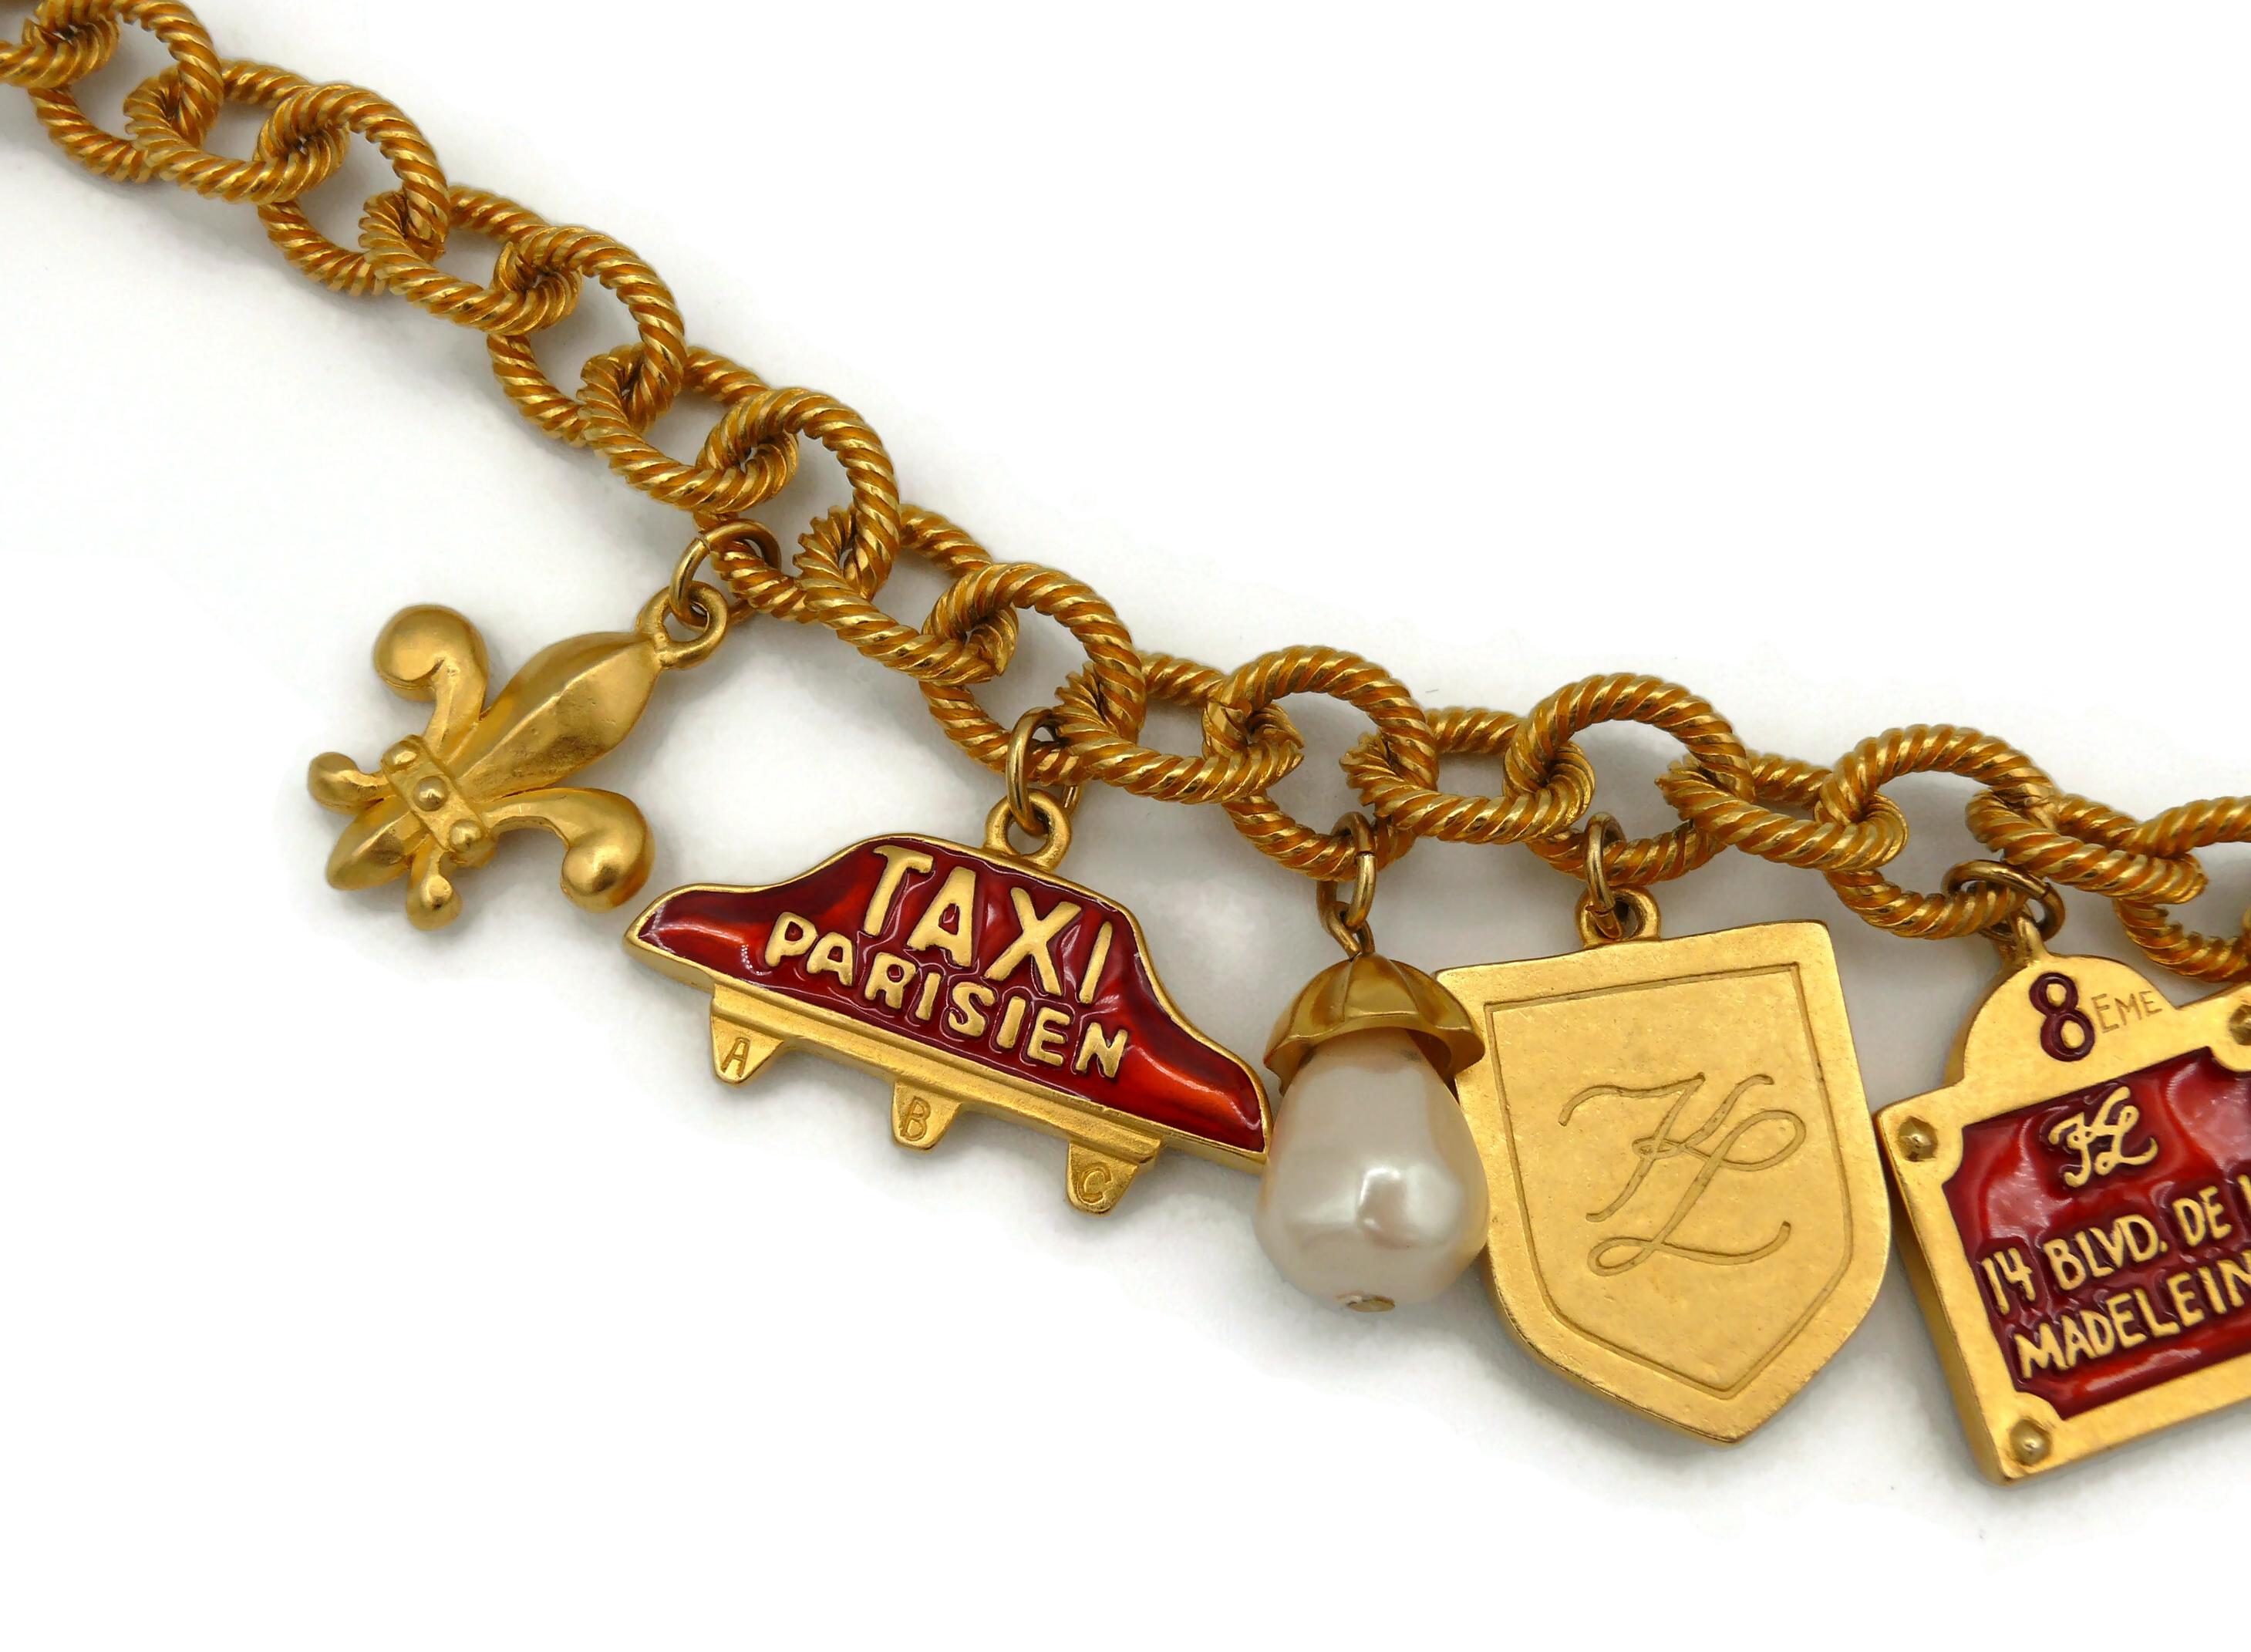 KARL LAGERFELD Vintage Paris Tribute Charm Necklace 6